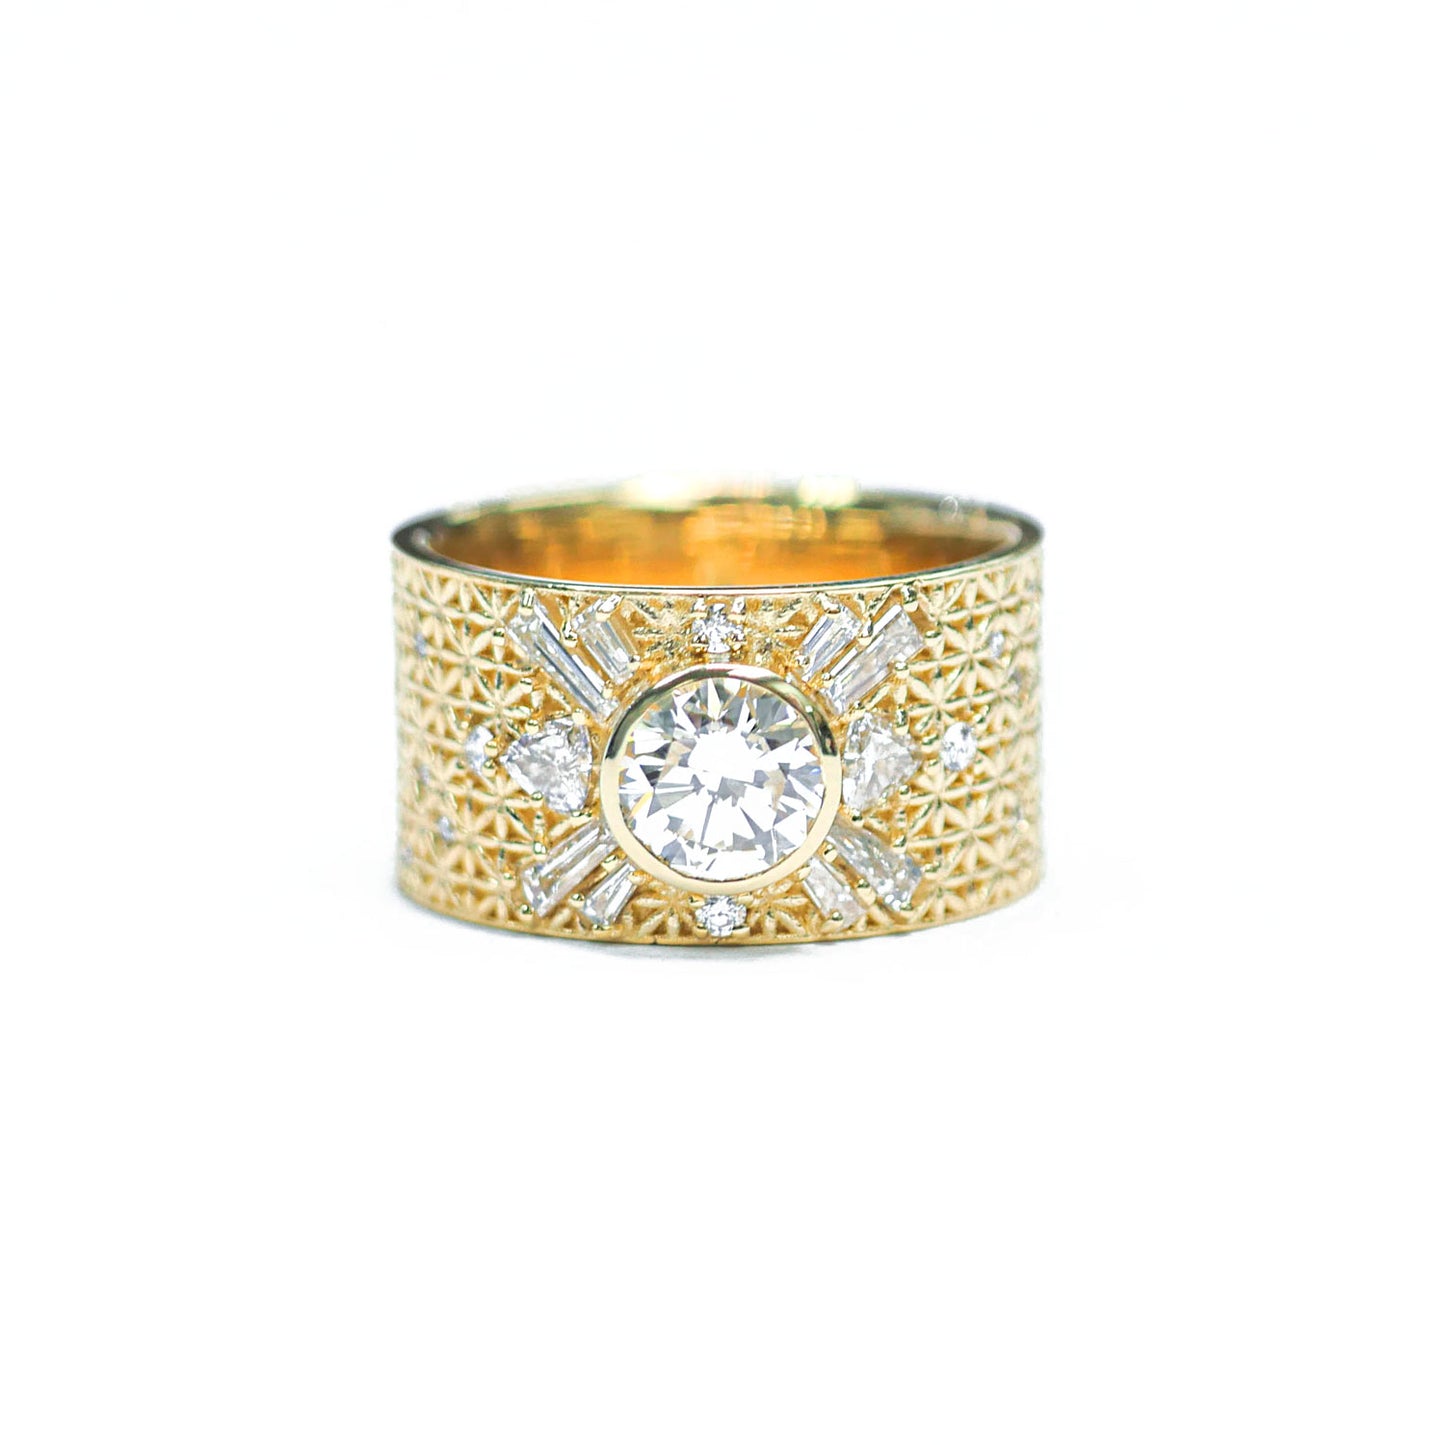 Heirloom Diamond Wide Antique Star Sunburst Ring